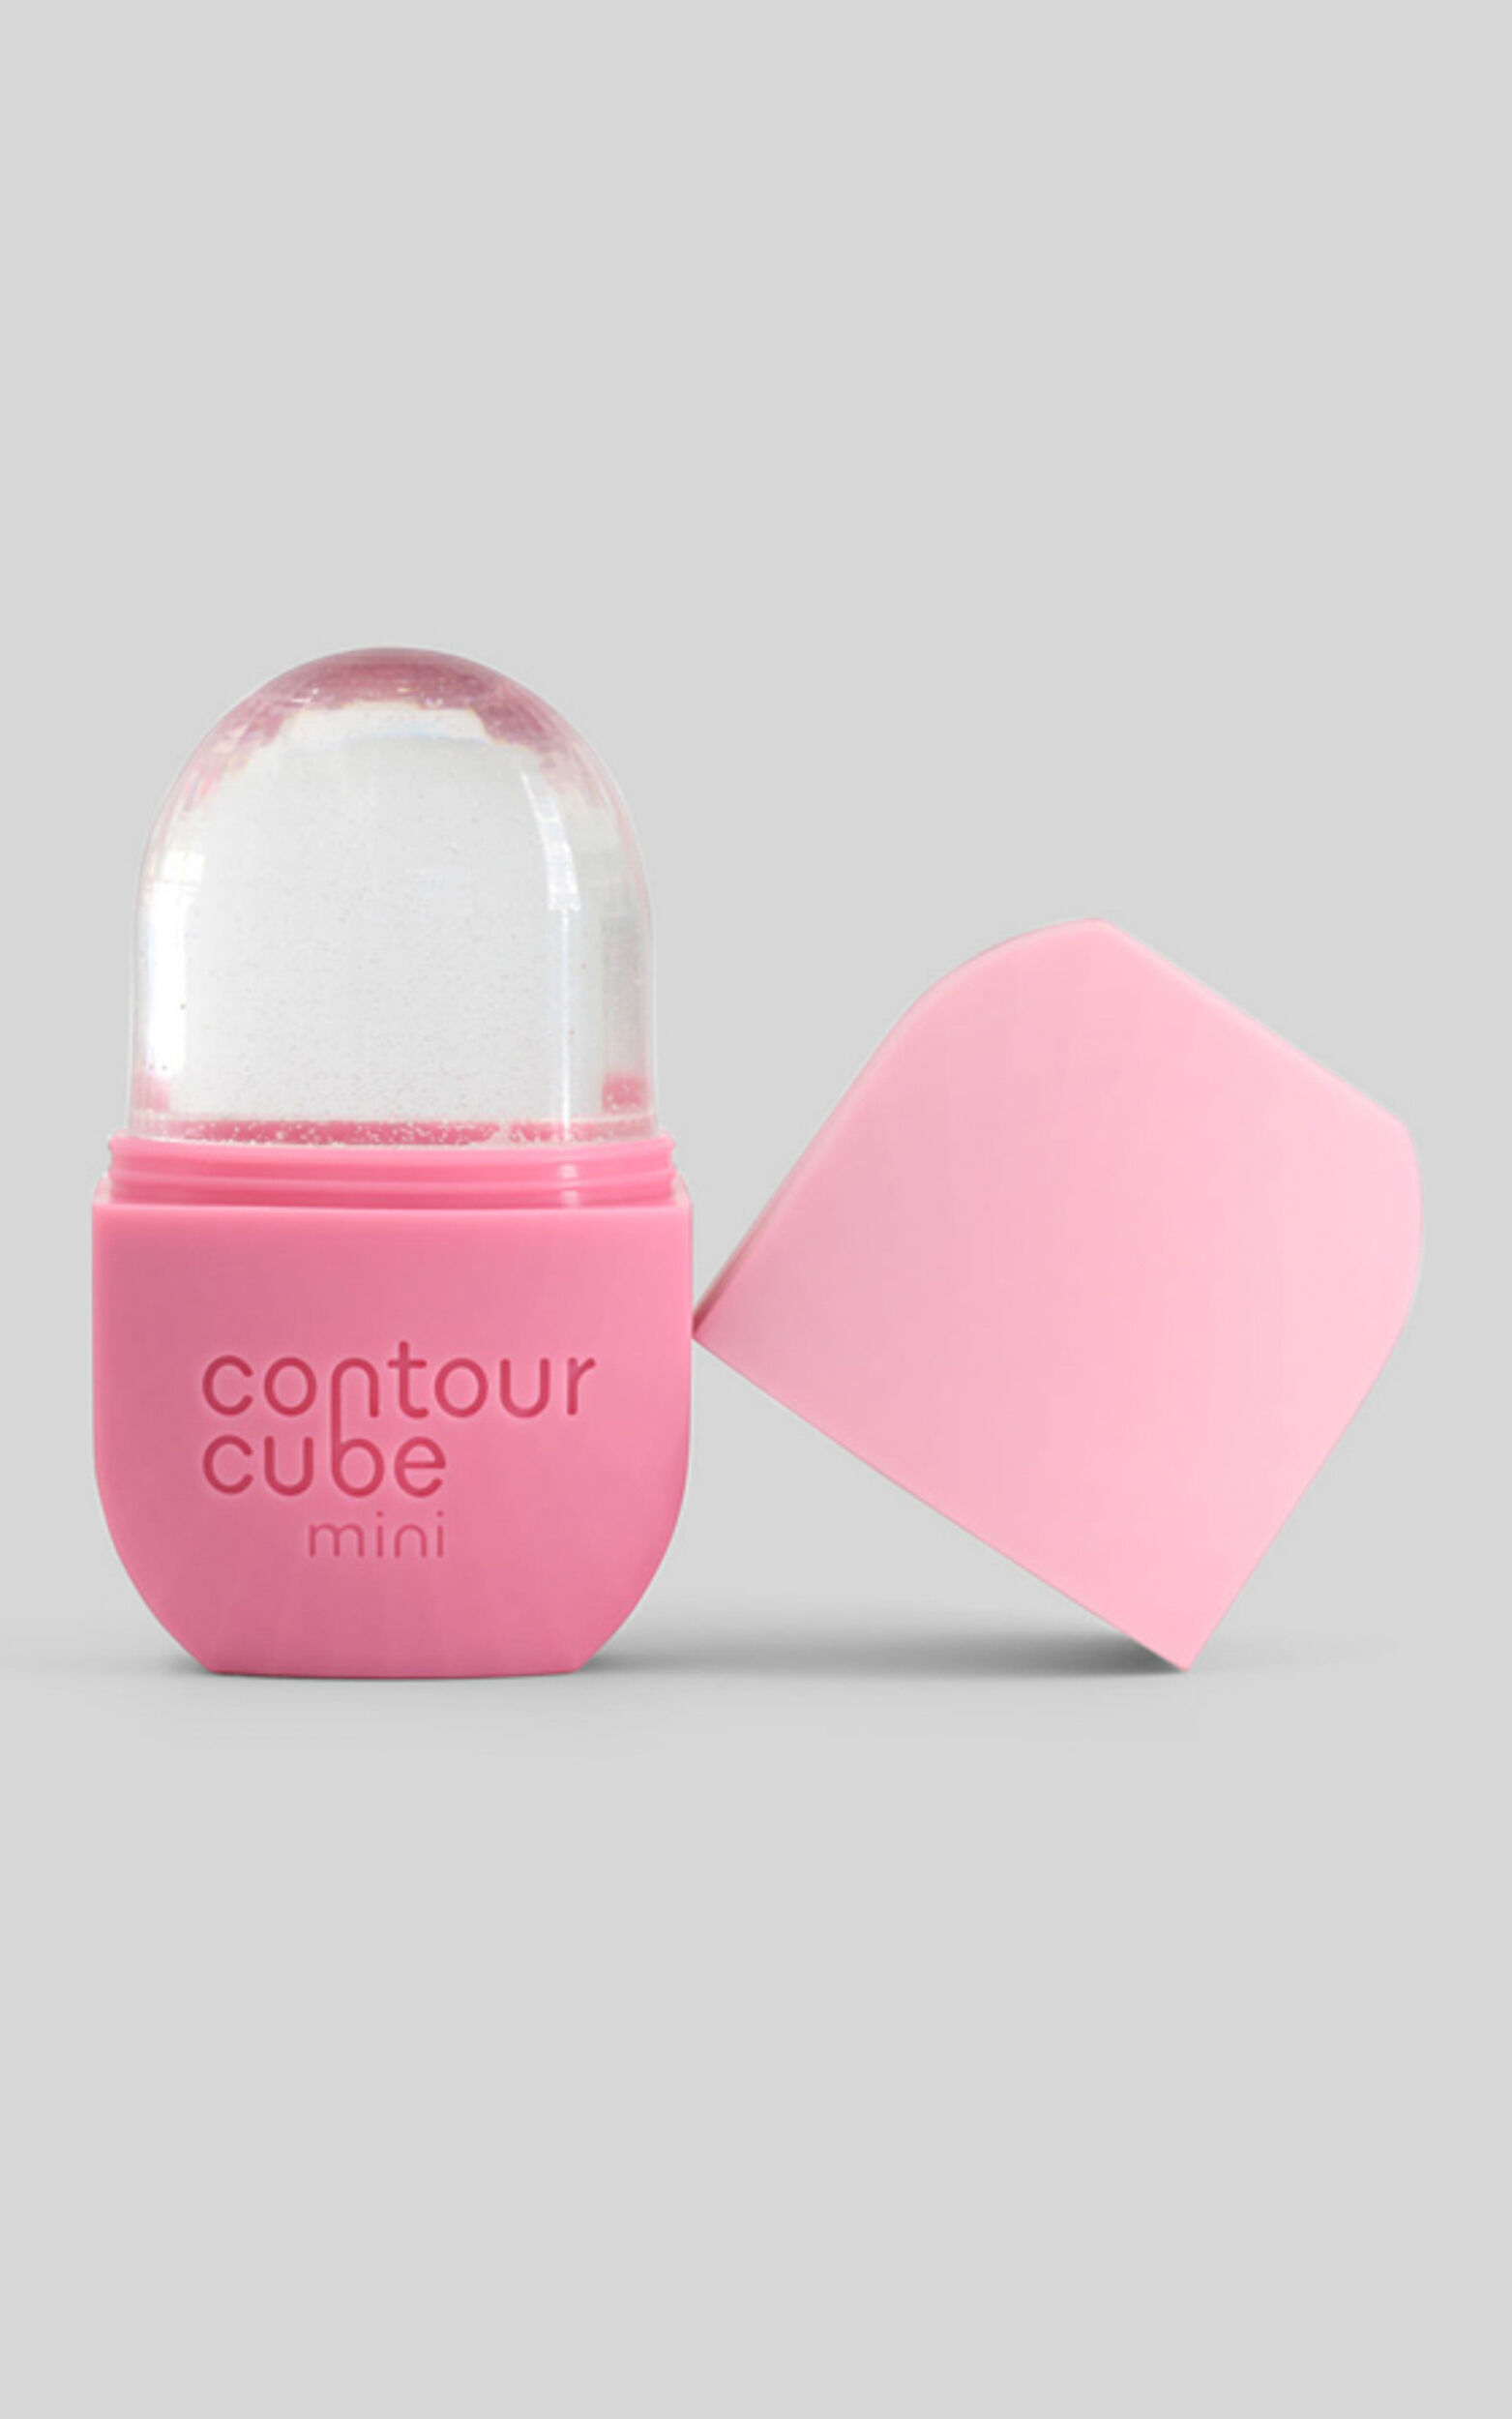 Contour Cube - Original Pink Contour Cube Mini in Pink - NoSize, PNK1